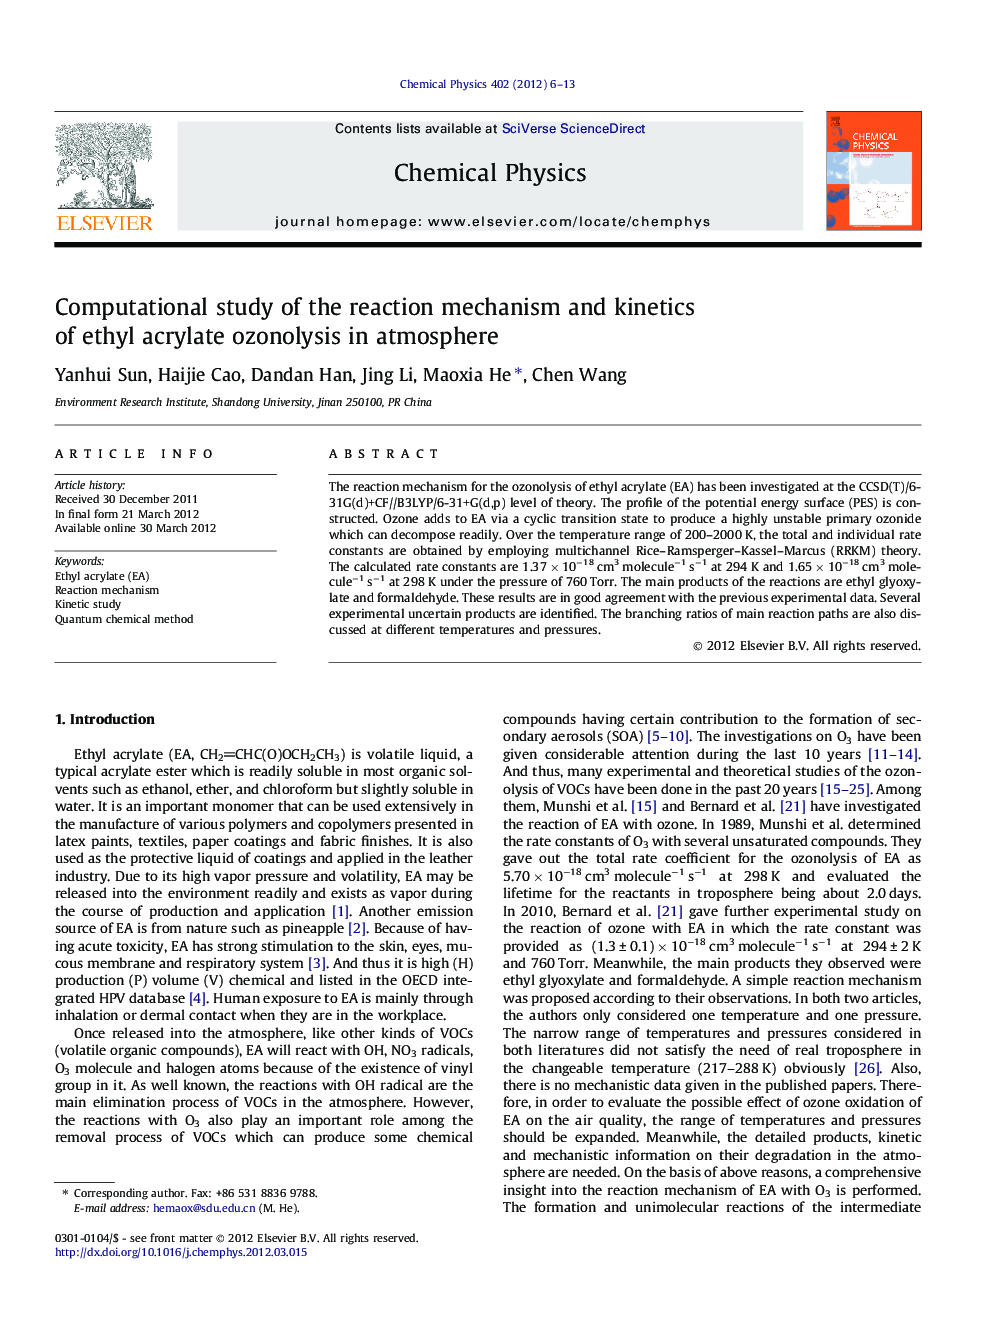 Computational study of the reaction mechanism and kinetics of ethyl acrylate ozonolysis in atmosphere